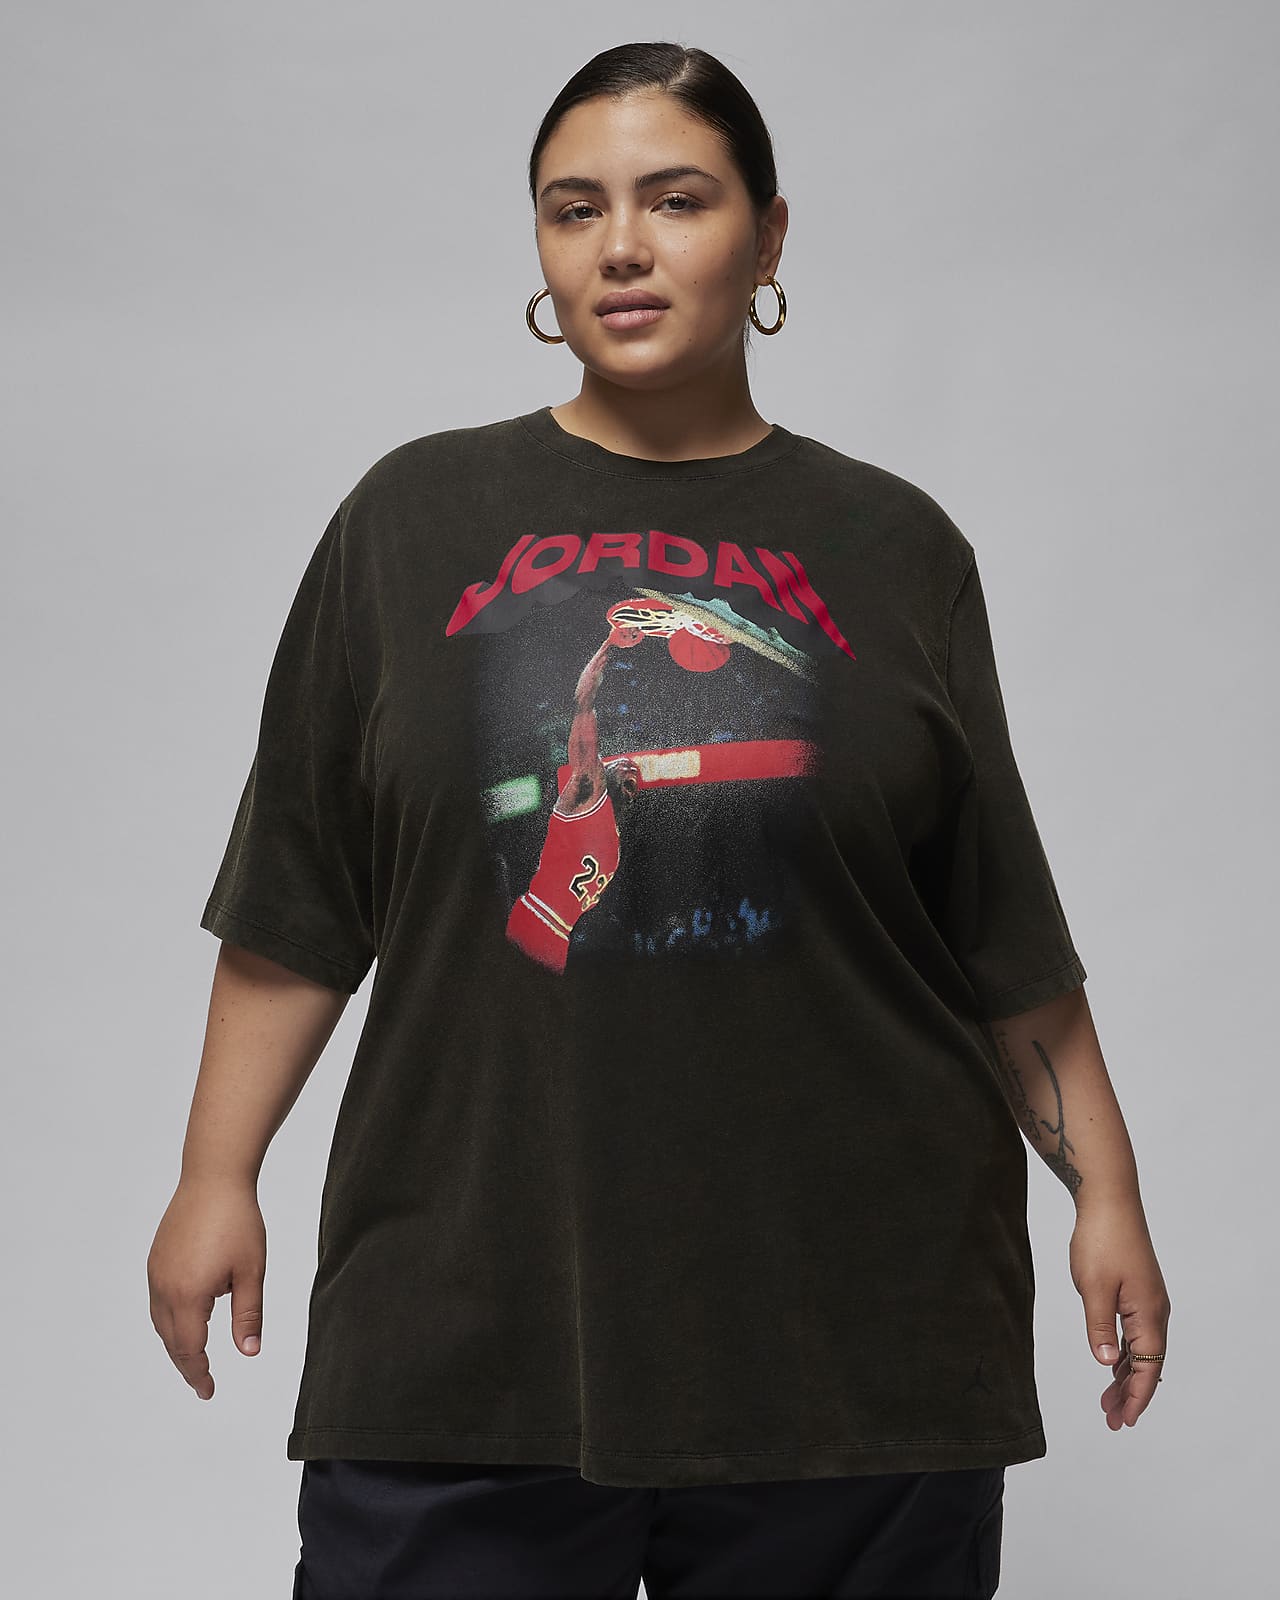 Jordan (Her)itage Women's Graphic T-Shirt (Plus Size)